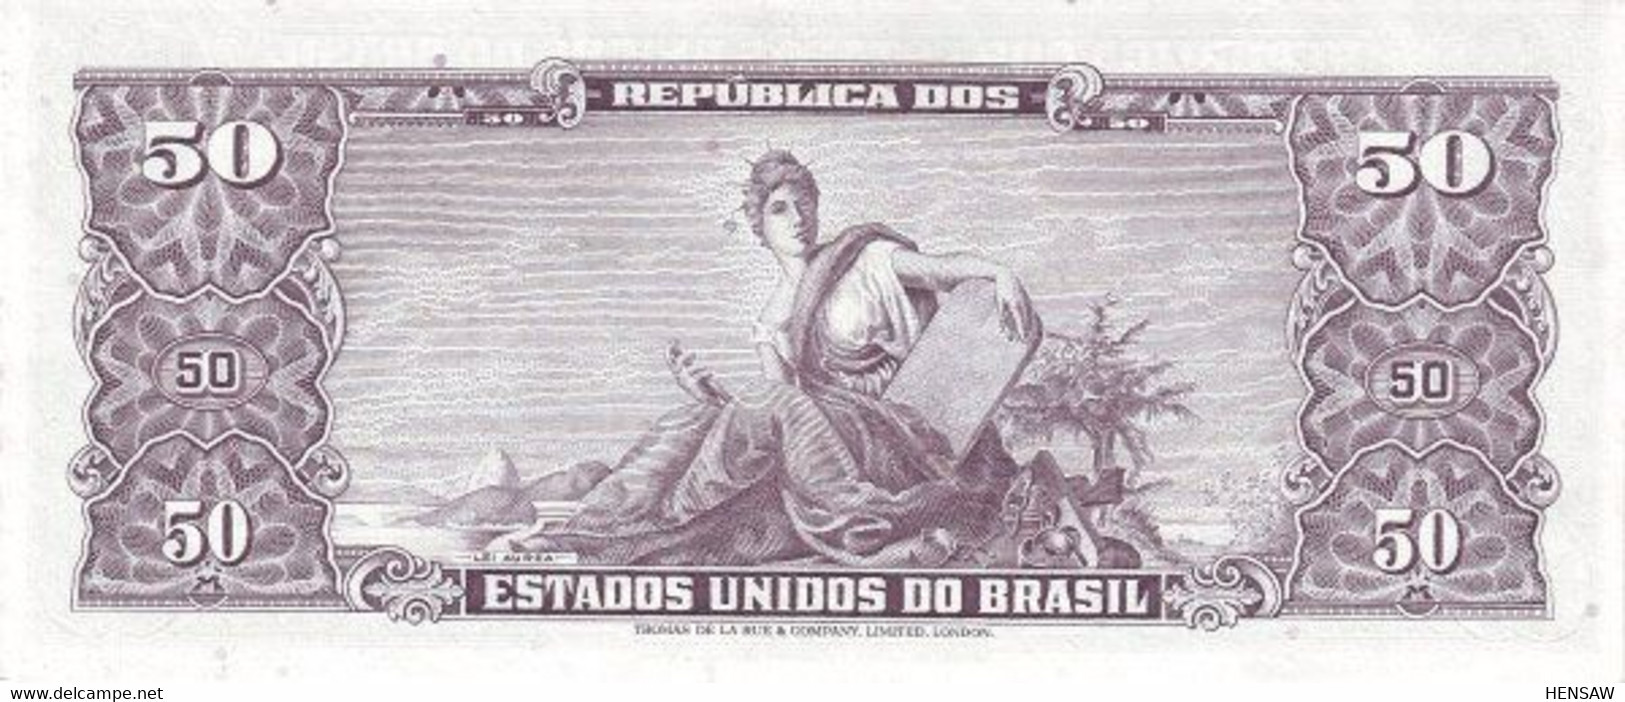 BRAZIL 5 CENTAVOS P 184b 1967 UNC SC NUEVO - Brazil